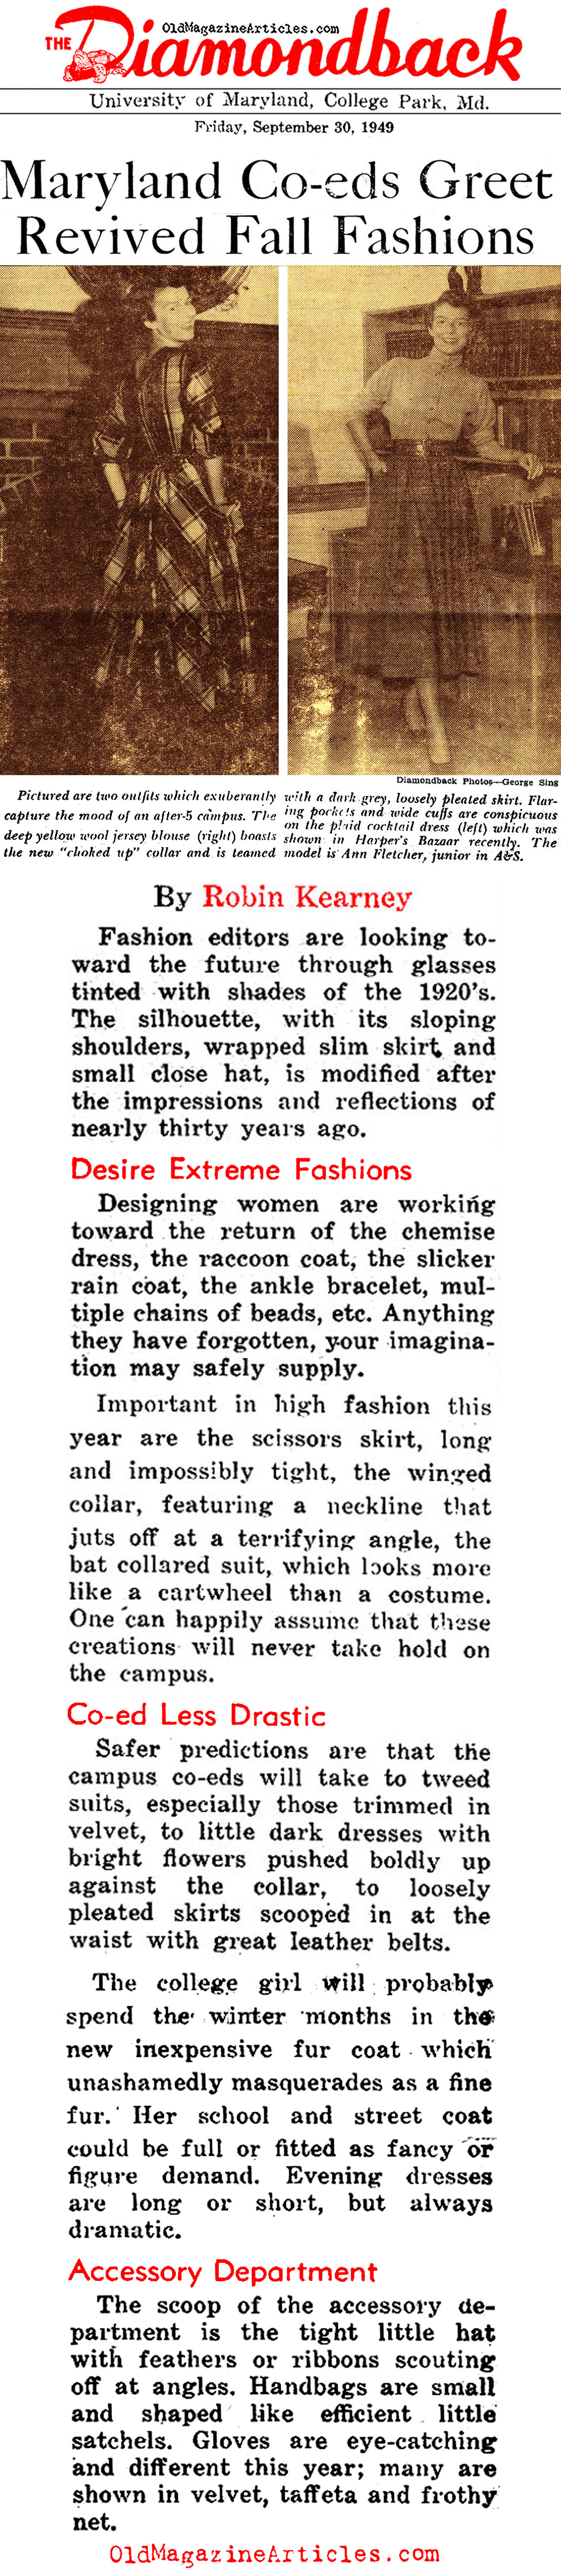 Campus Fashions for Autumn (The Diamondback, 1949)